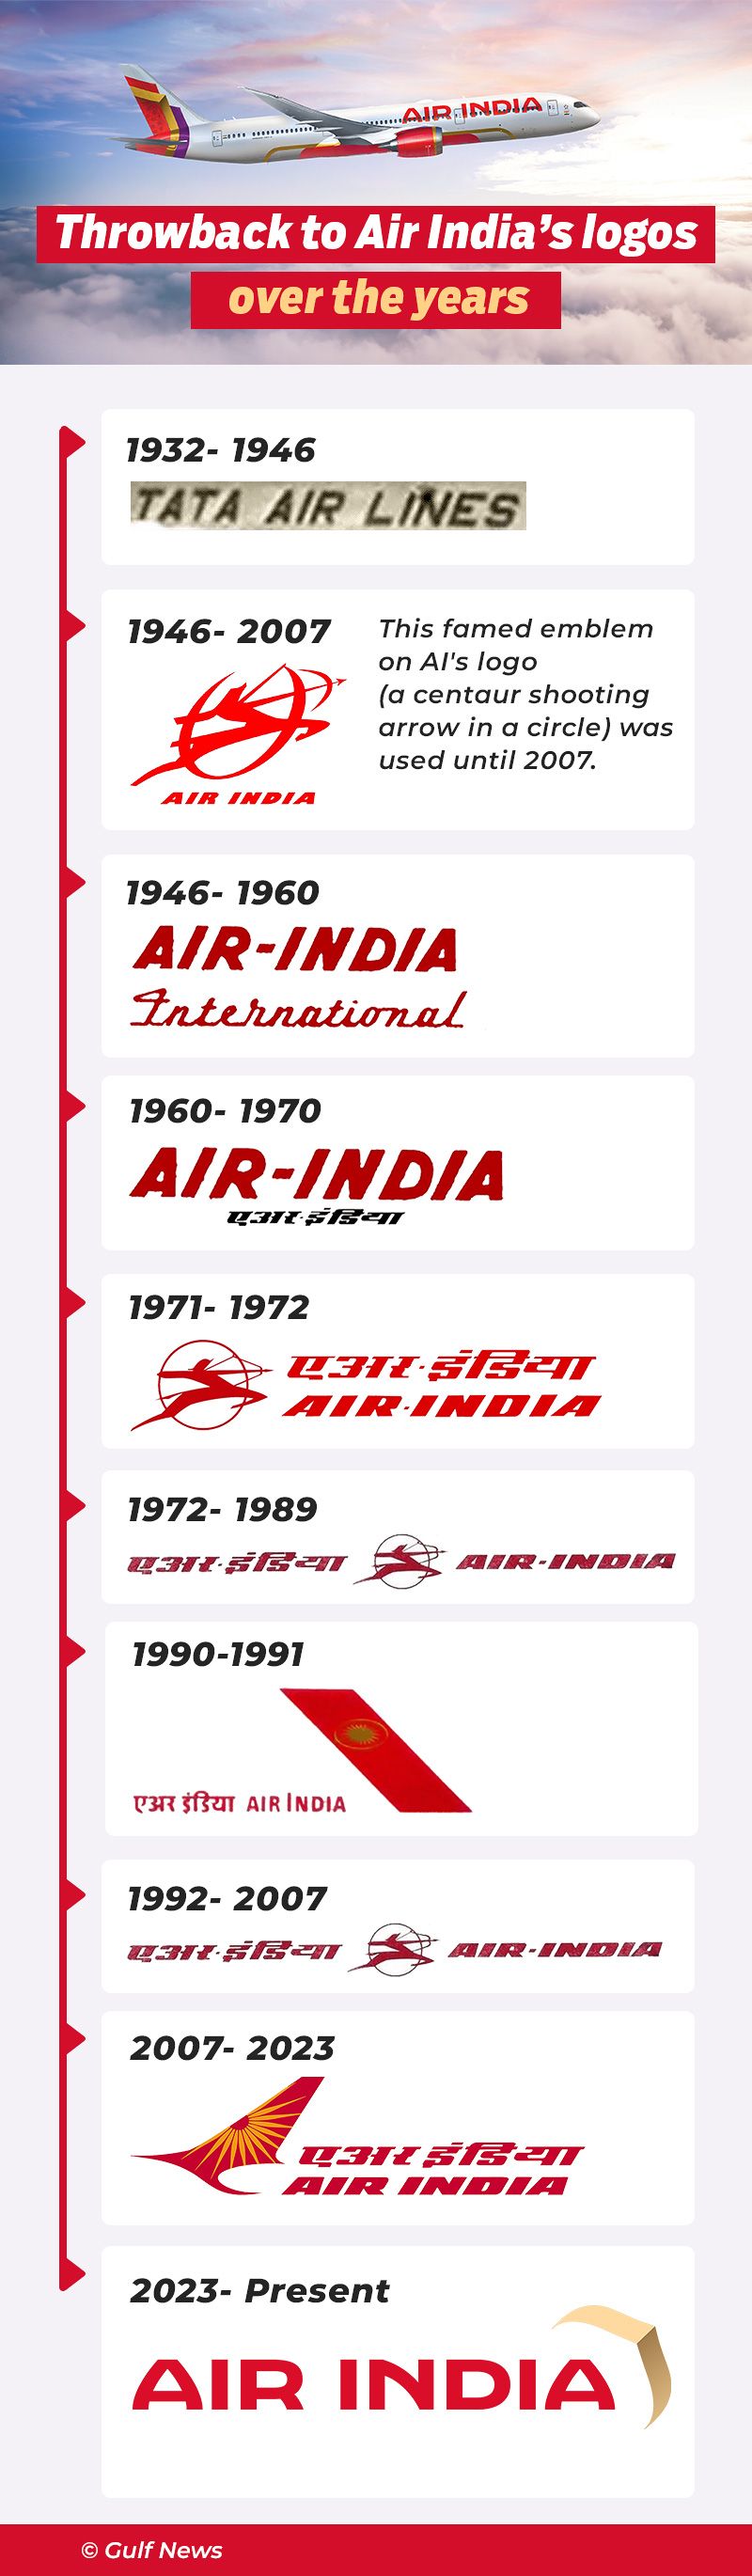 Air India logos timeline